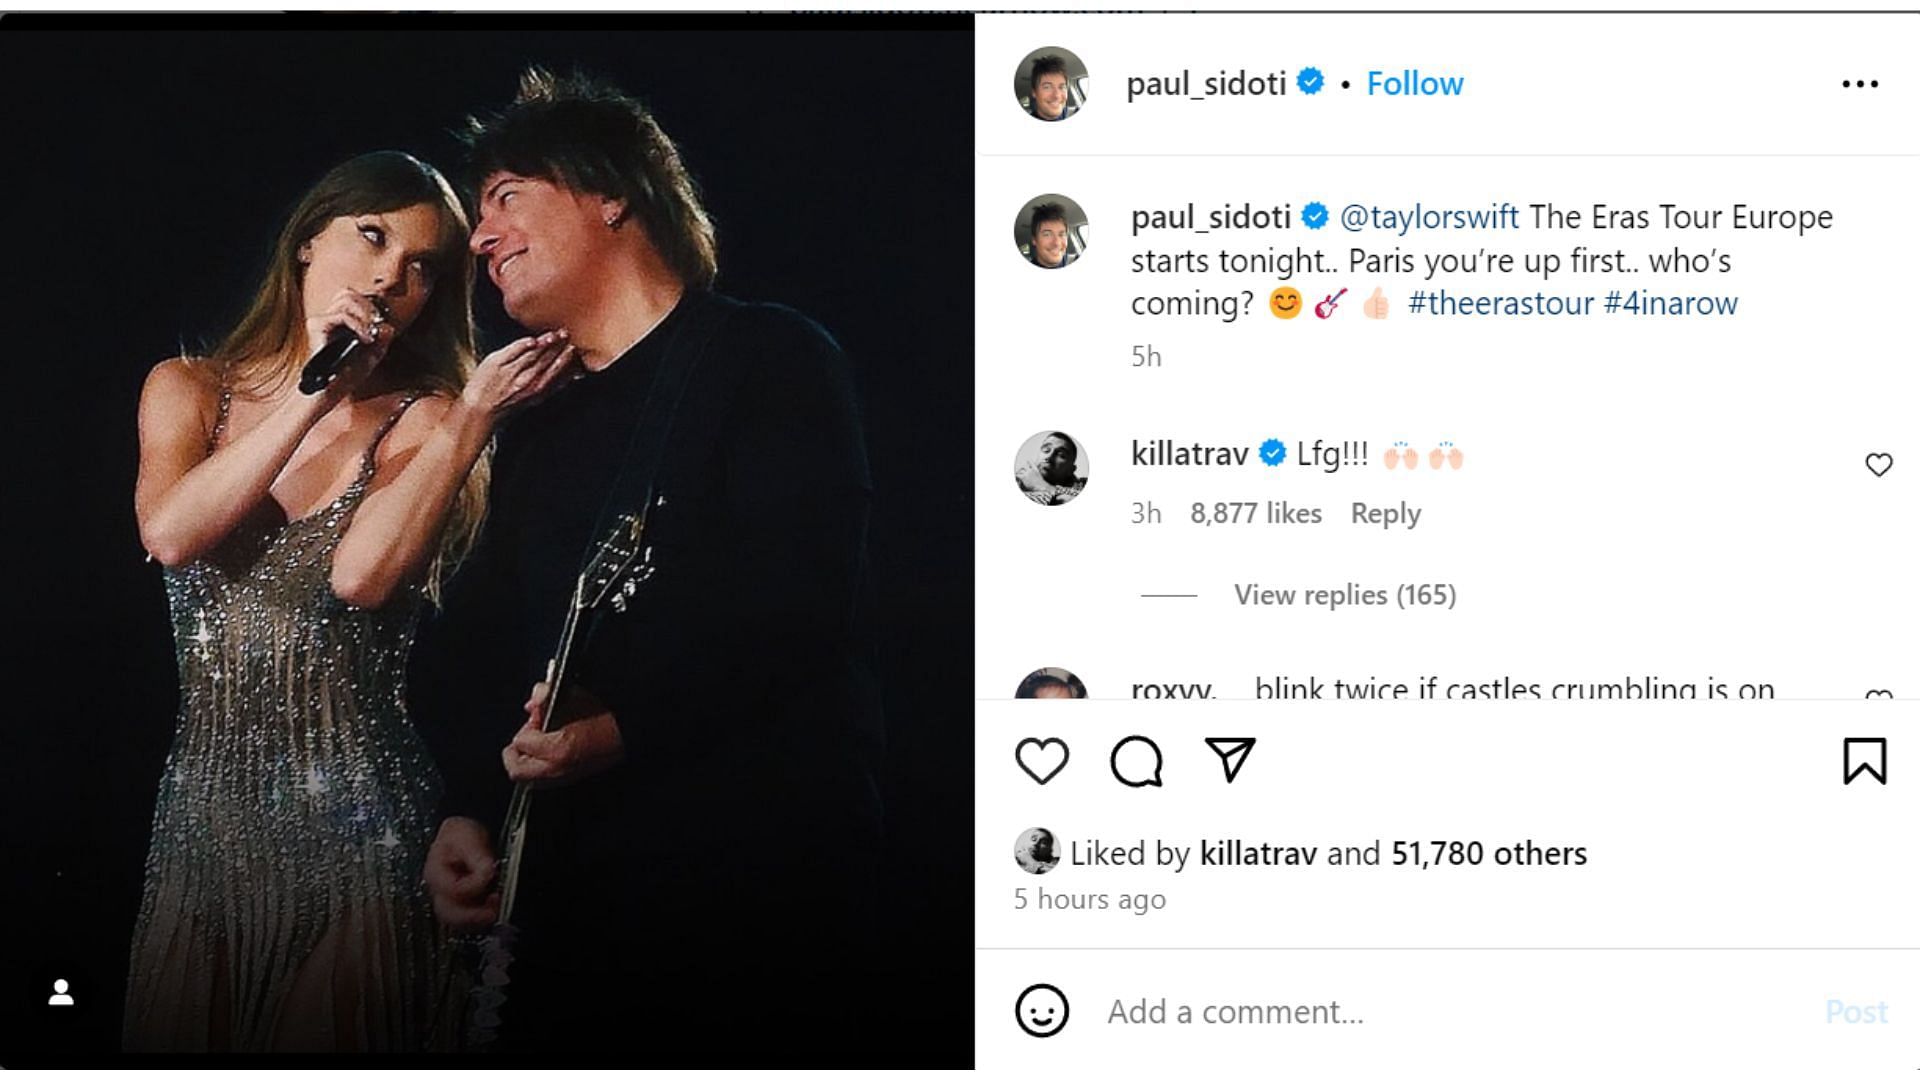 Travis Kelce comments on Taylor Swift&#039;s guitarist Paul Sidoti&#039;s post (From: @paul_sidoti)